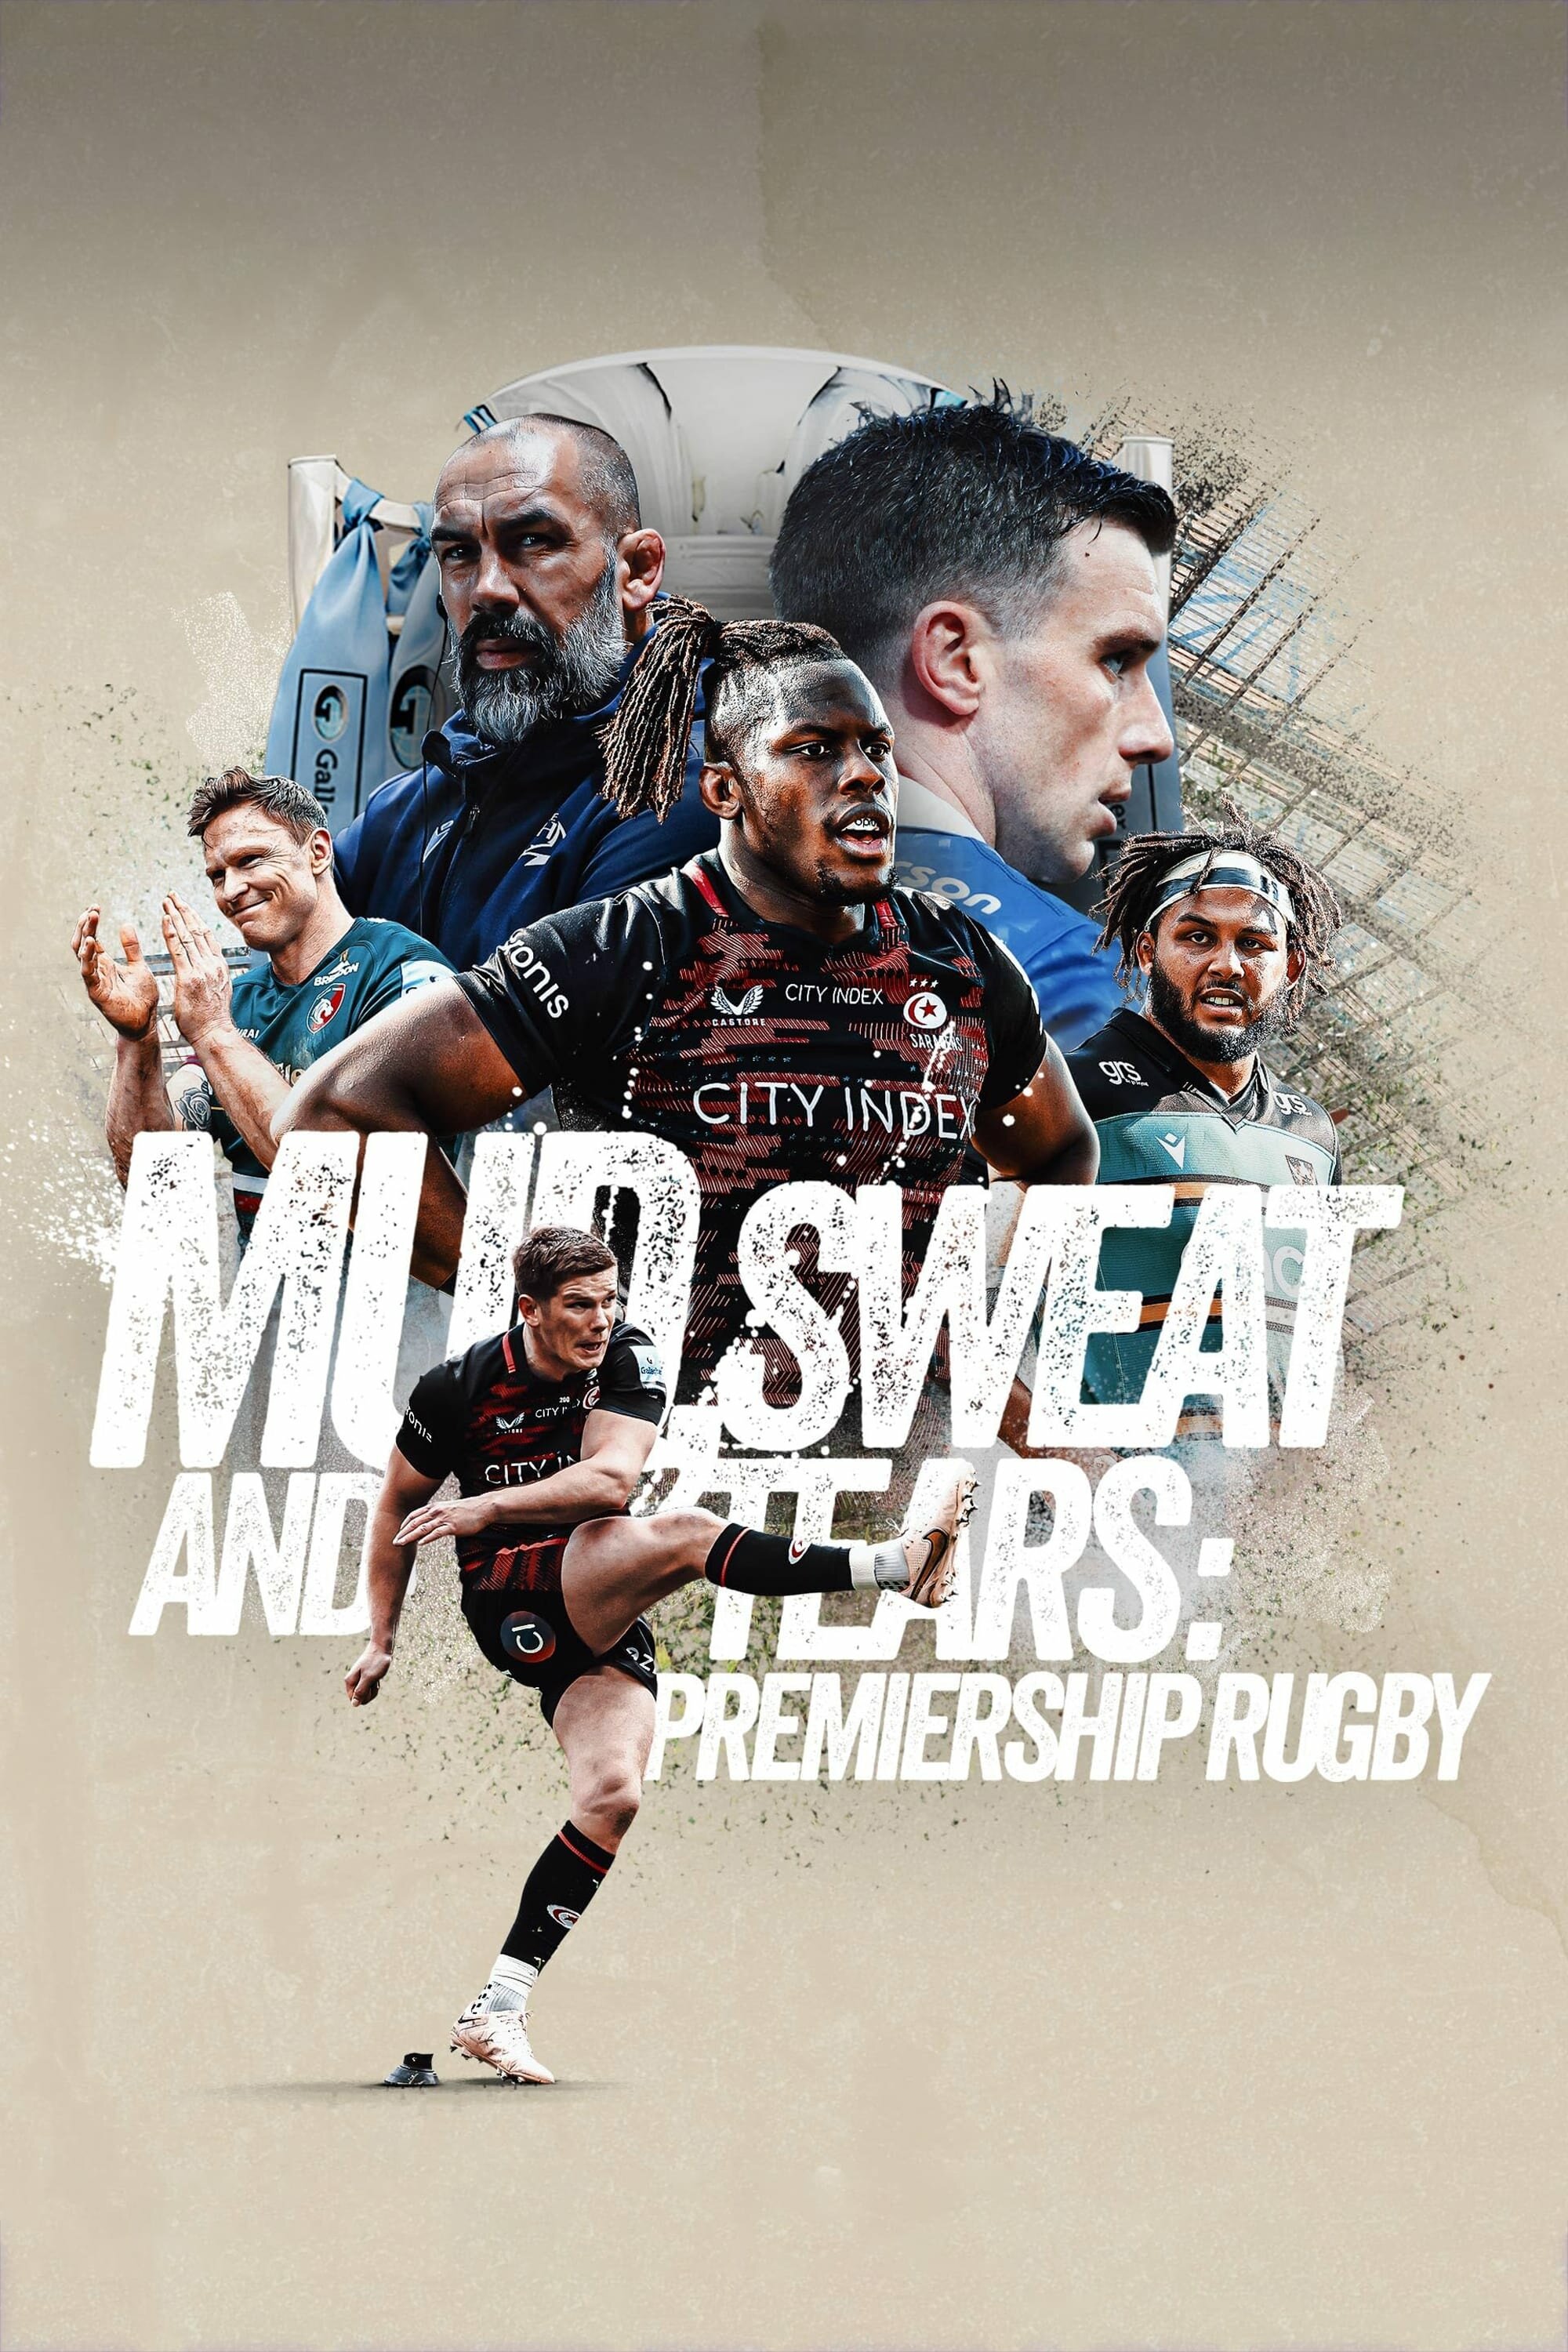 Mud, Sweat and Tears: Premiership Rugby ne zaman